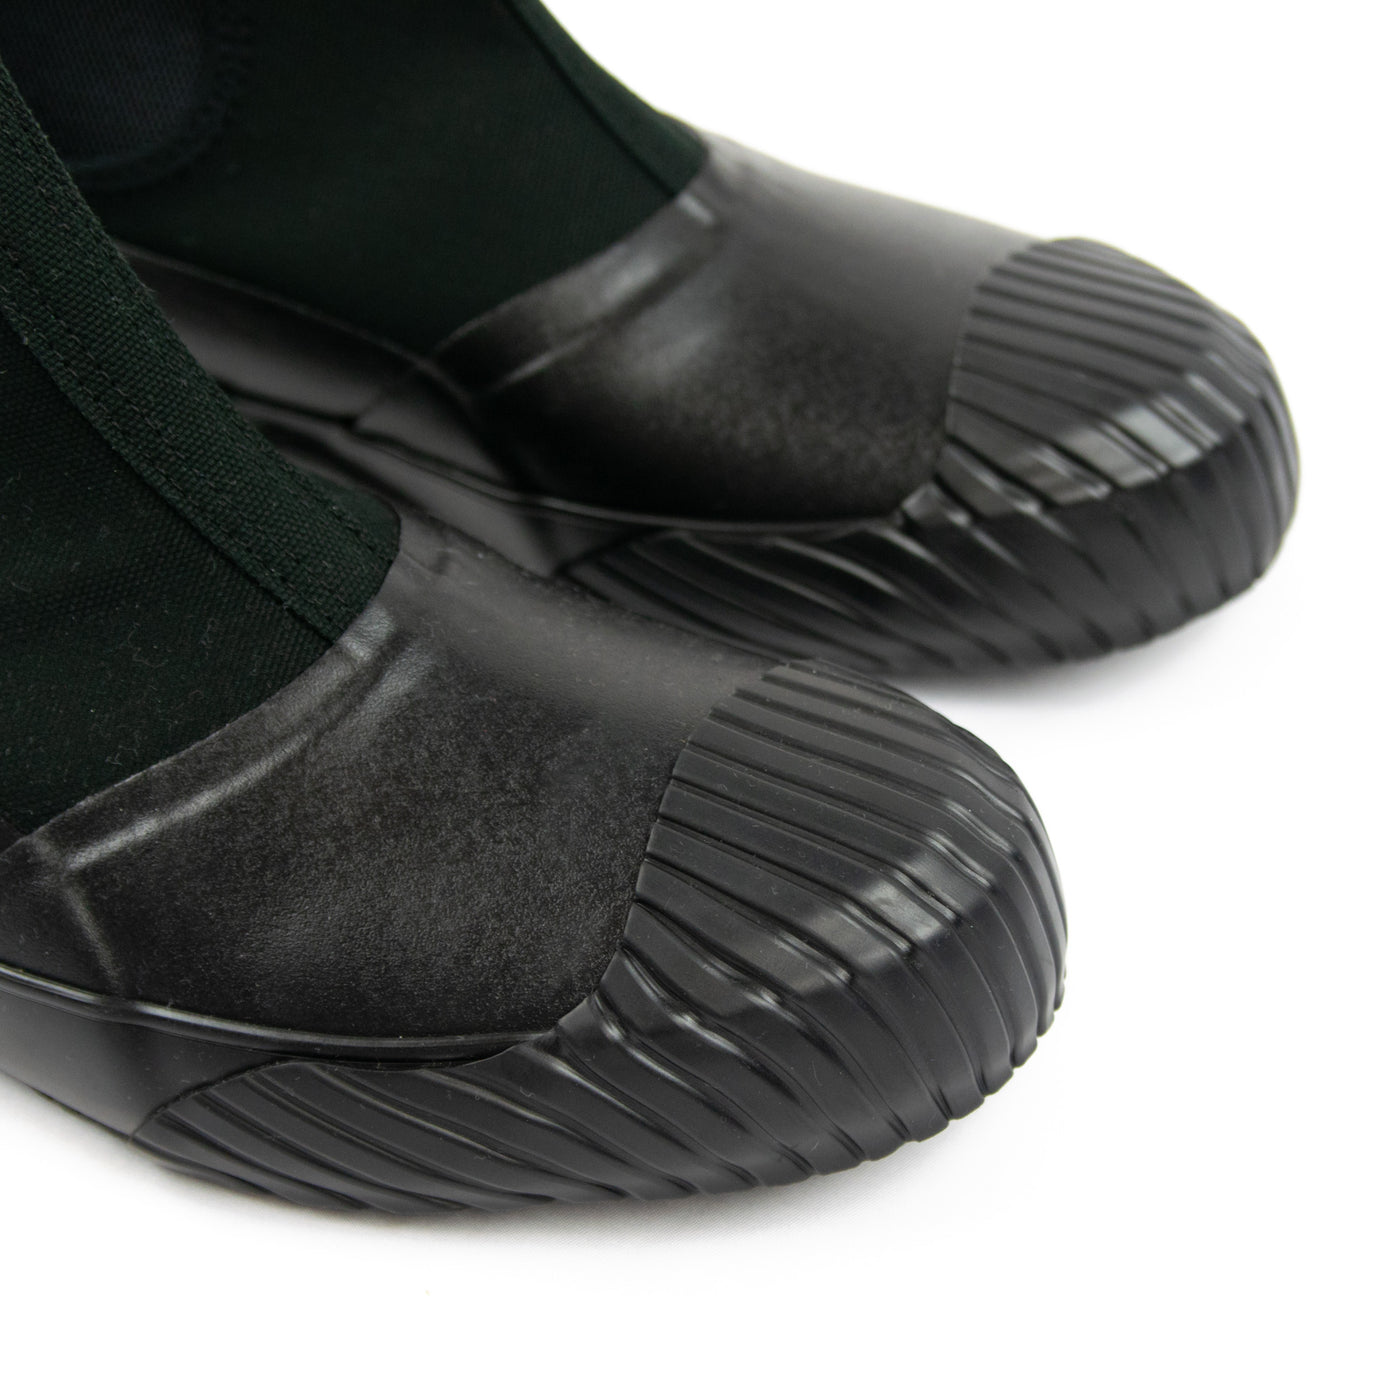 Moonstar Vulcanised All Weather Sidegoa Boots Black Made In Japan Toe Cap